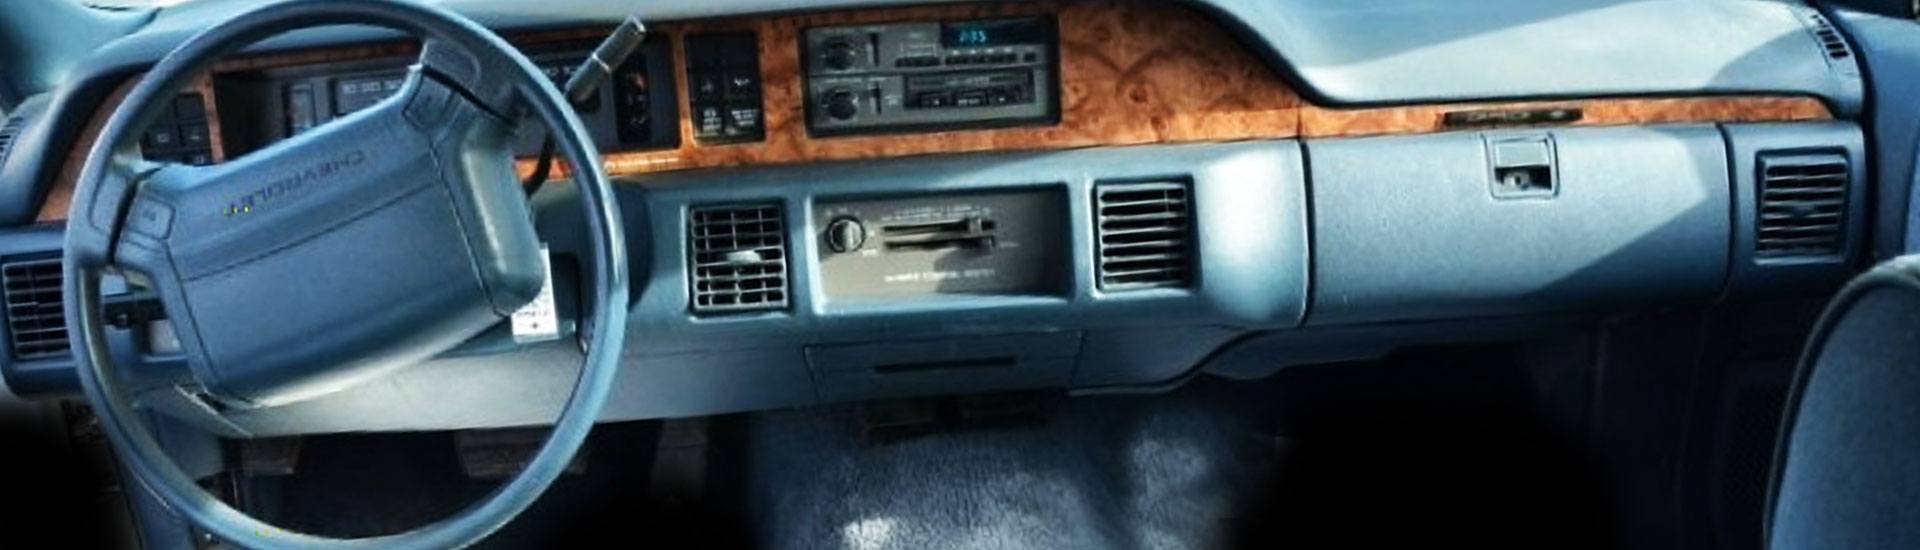 1992 Chevrolet Caprice Dash Kits